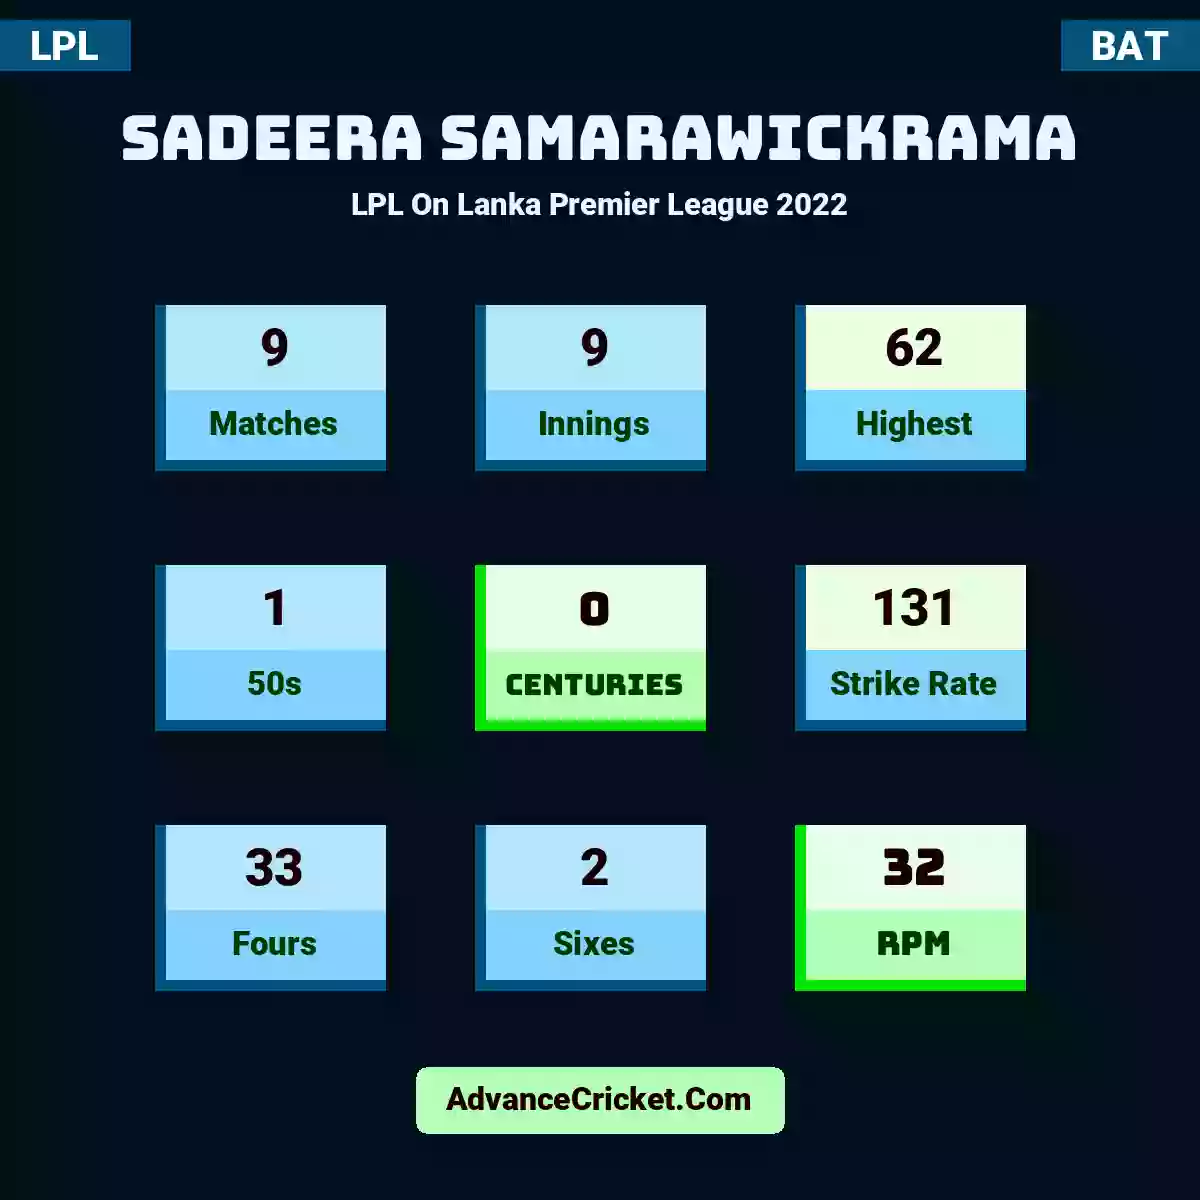 Sadeera Samarawickrama LPL  On Lanka Premier League 2022, Sadeera Samarawickrama played 9 matches, scored 62 runs as highest, 1 half-centuries, and 0 centuries, with a strike rate of 131. S.Samarawickrama hit 33 fours and 2 sixes, with an RPM of 32.